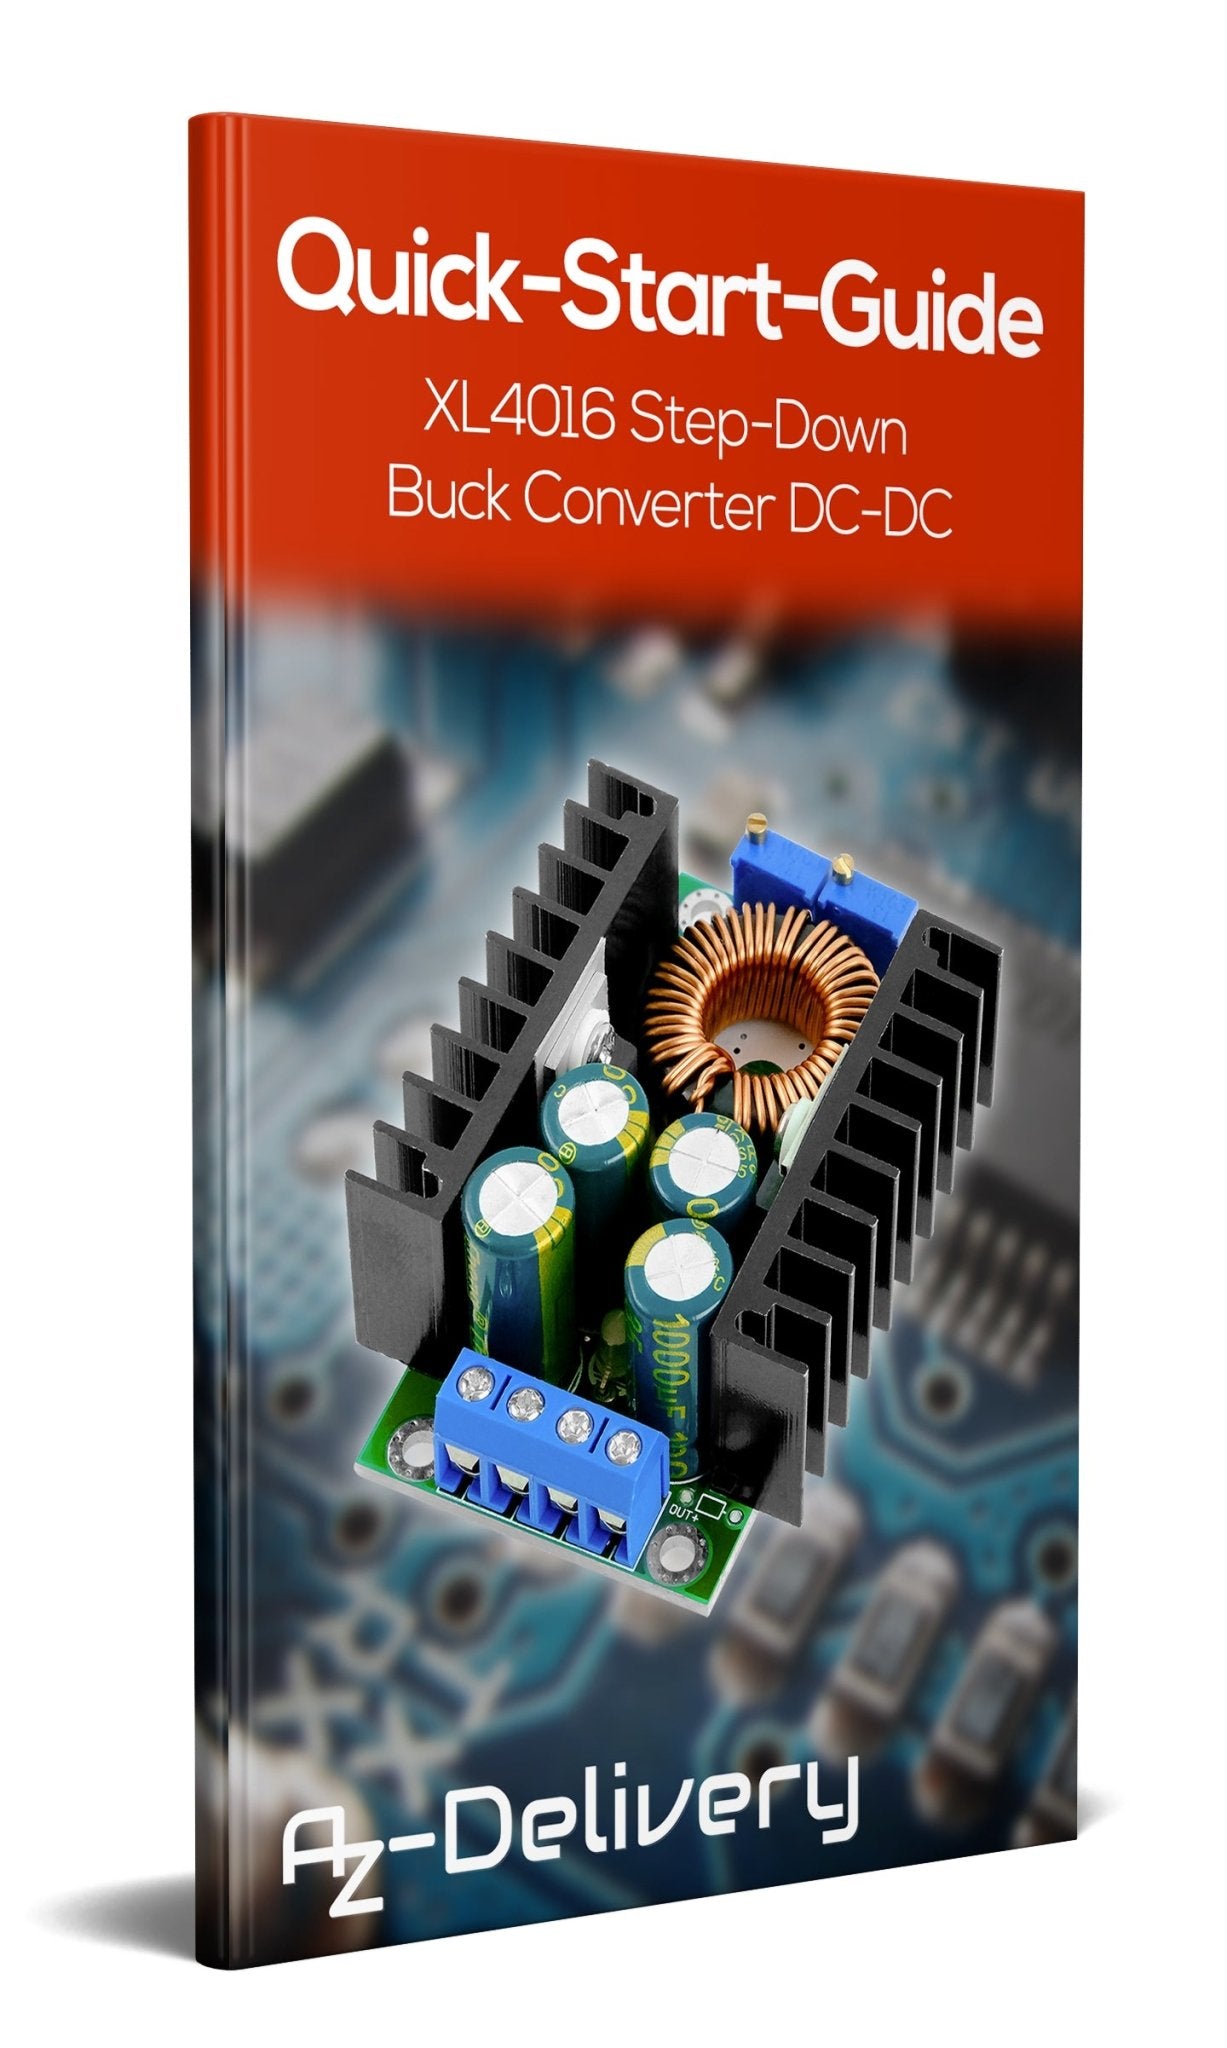 XL4016 Step-Down Buck Converter DC-DC